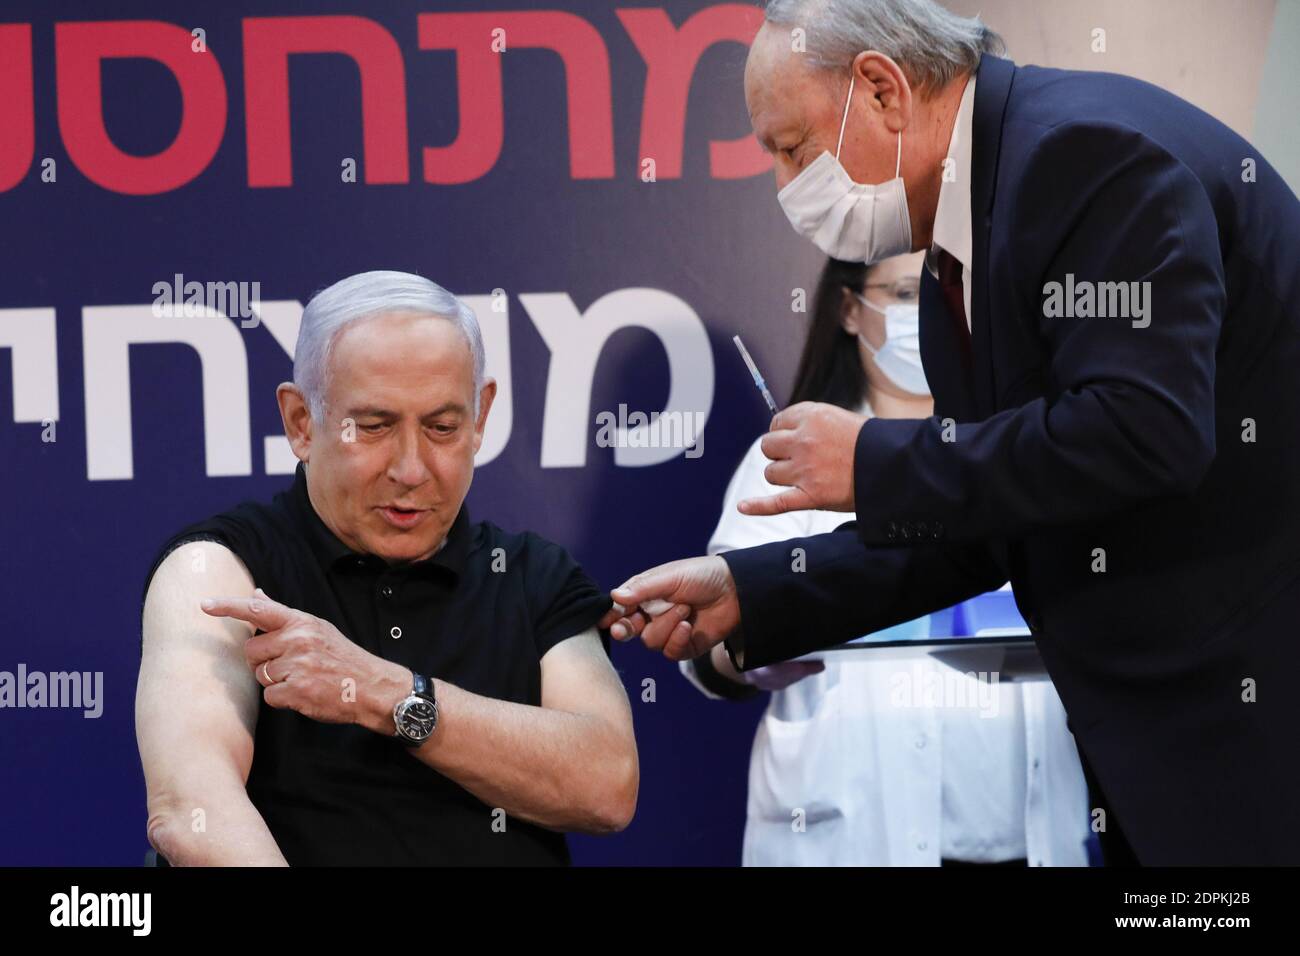 Ramat Gan, Israel. 19th Dec, 2020. Israeli Prime Minister Minister Benjamin Netanyahu receives a coronavirus (COVID-19) vaccine at Sheba Medical Center in Ramat Gan, Israel on Saturday, December 19, 2020. Pool photo by Amir Cohen/UPI Credit: UPI/Alamy Live News Stock Photo